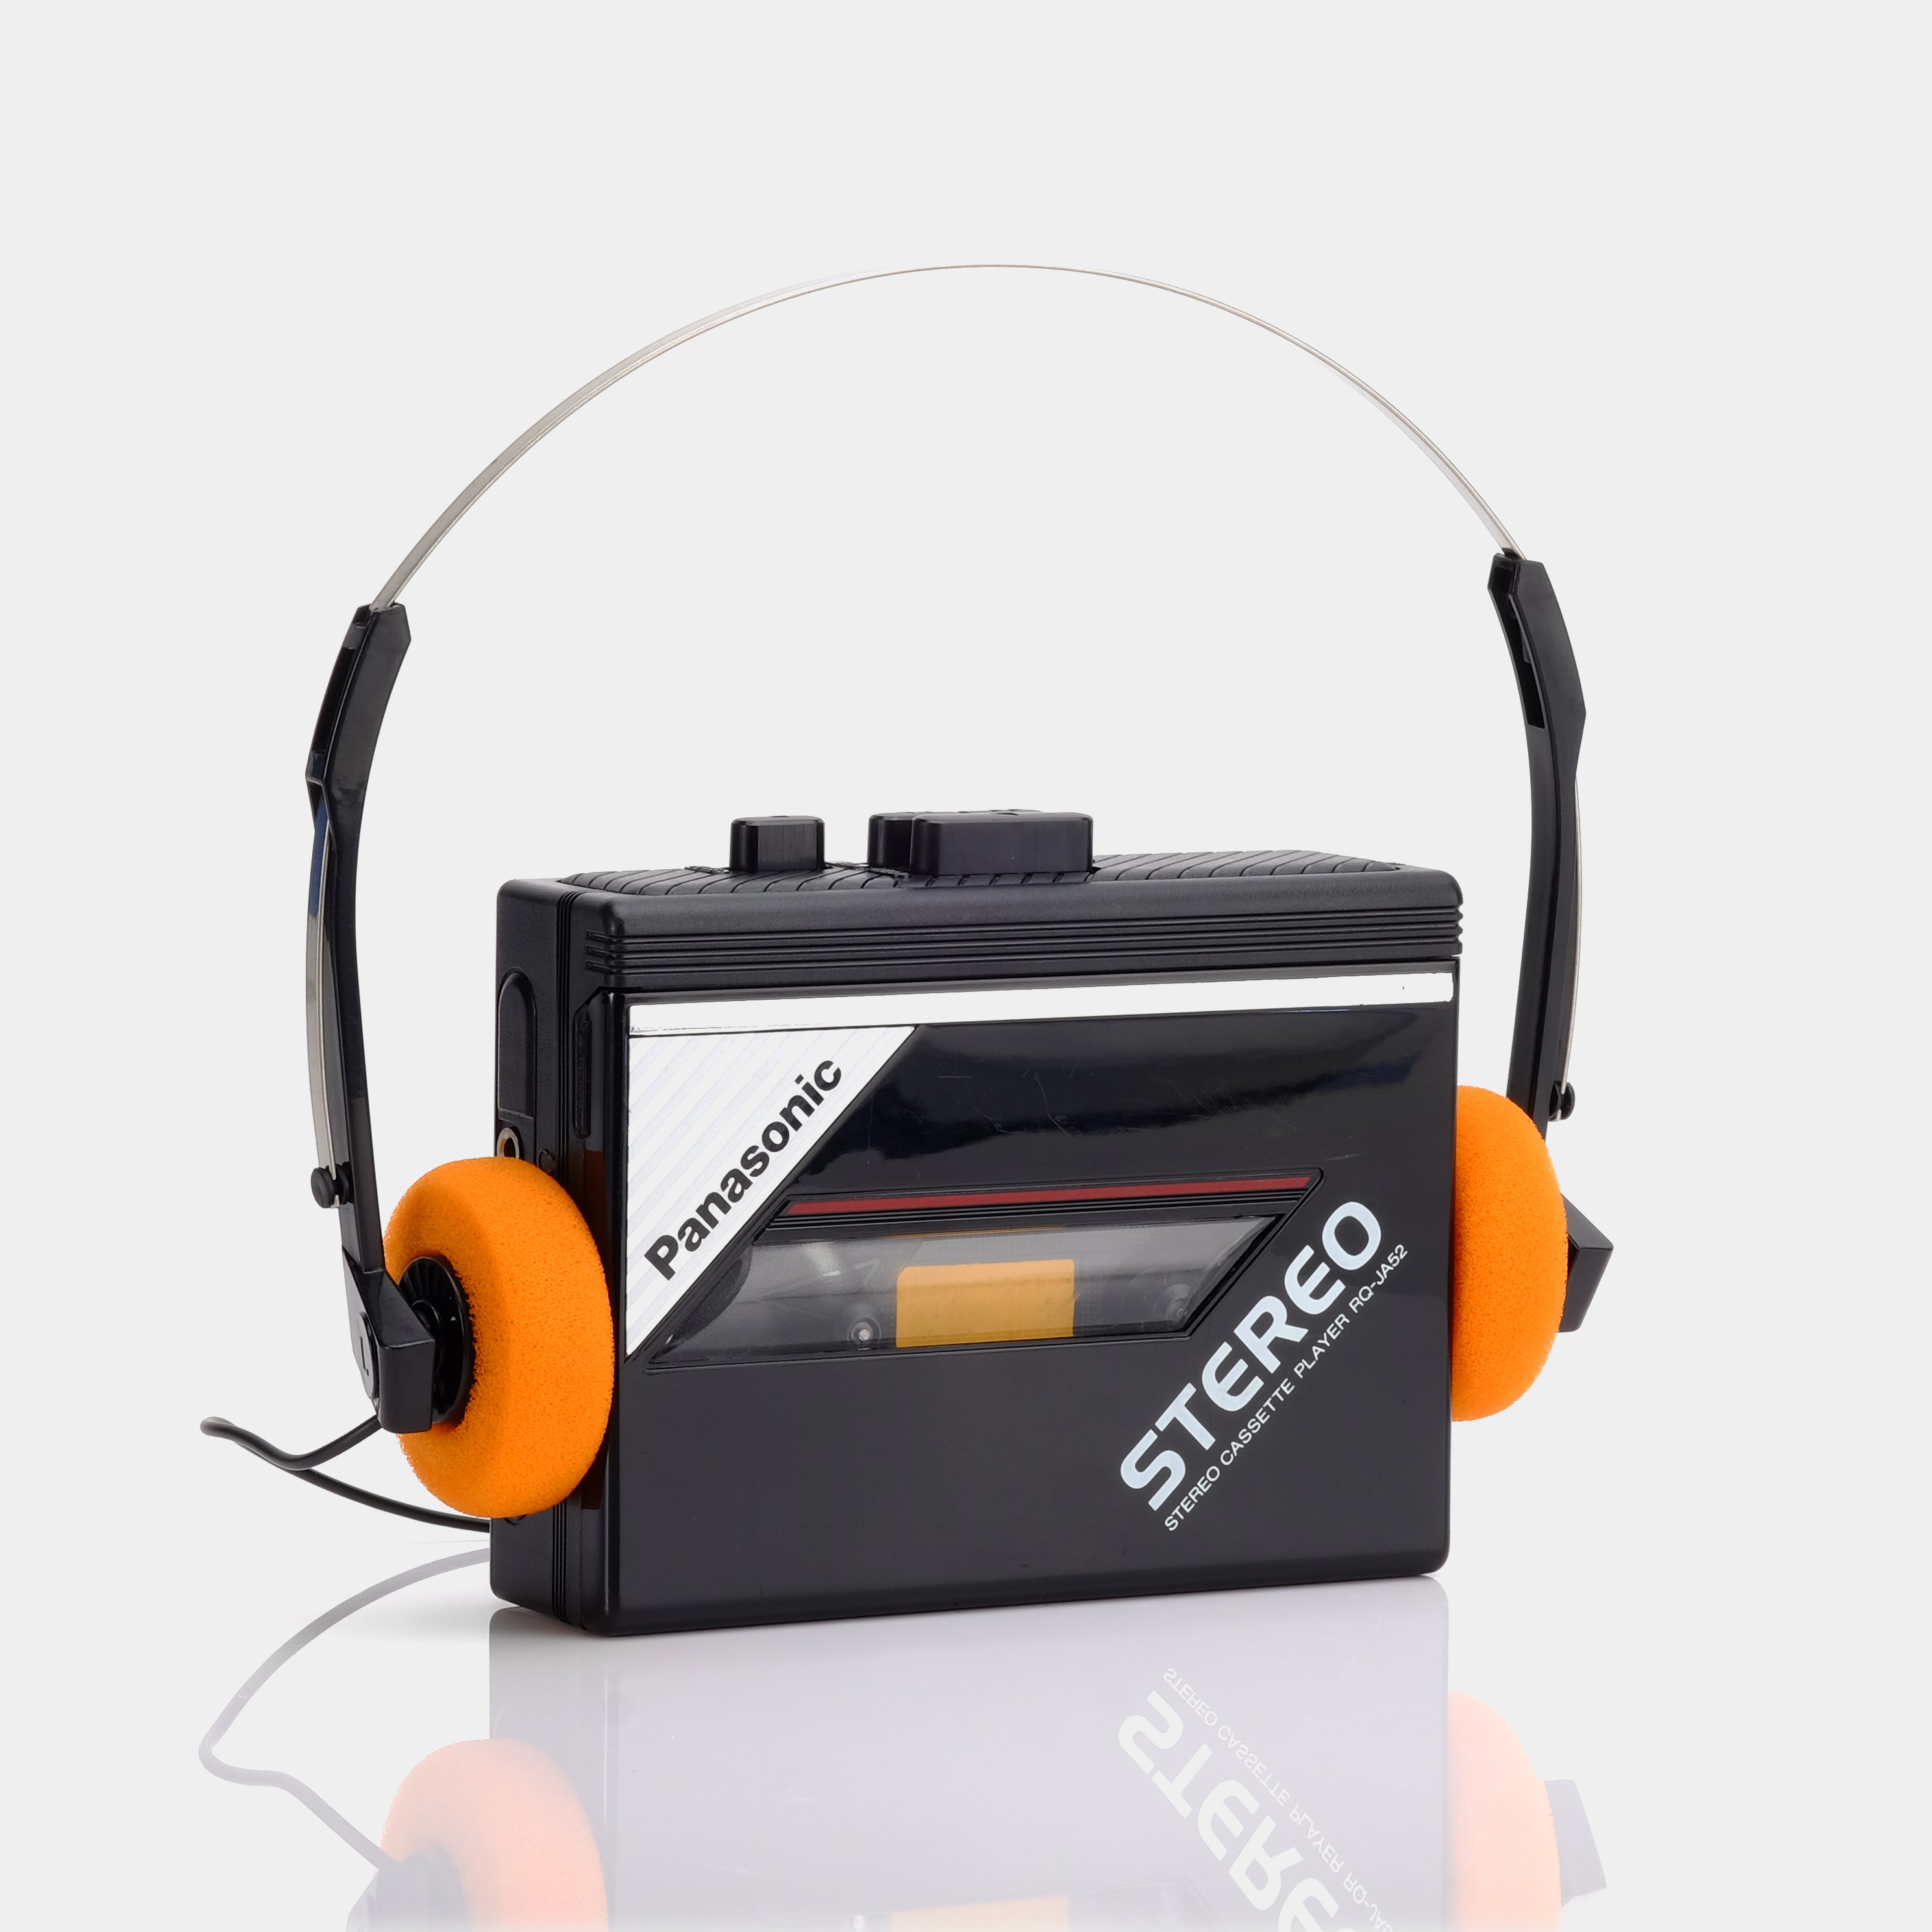 Panasonic Model RQ-JA52 Portable Cassette Player